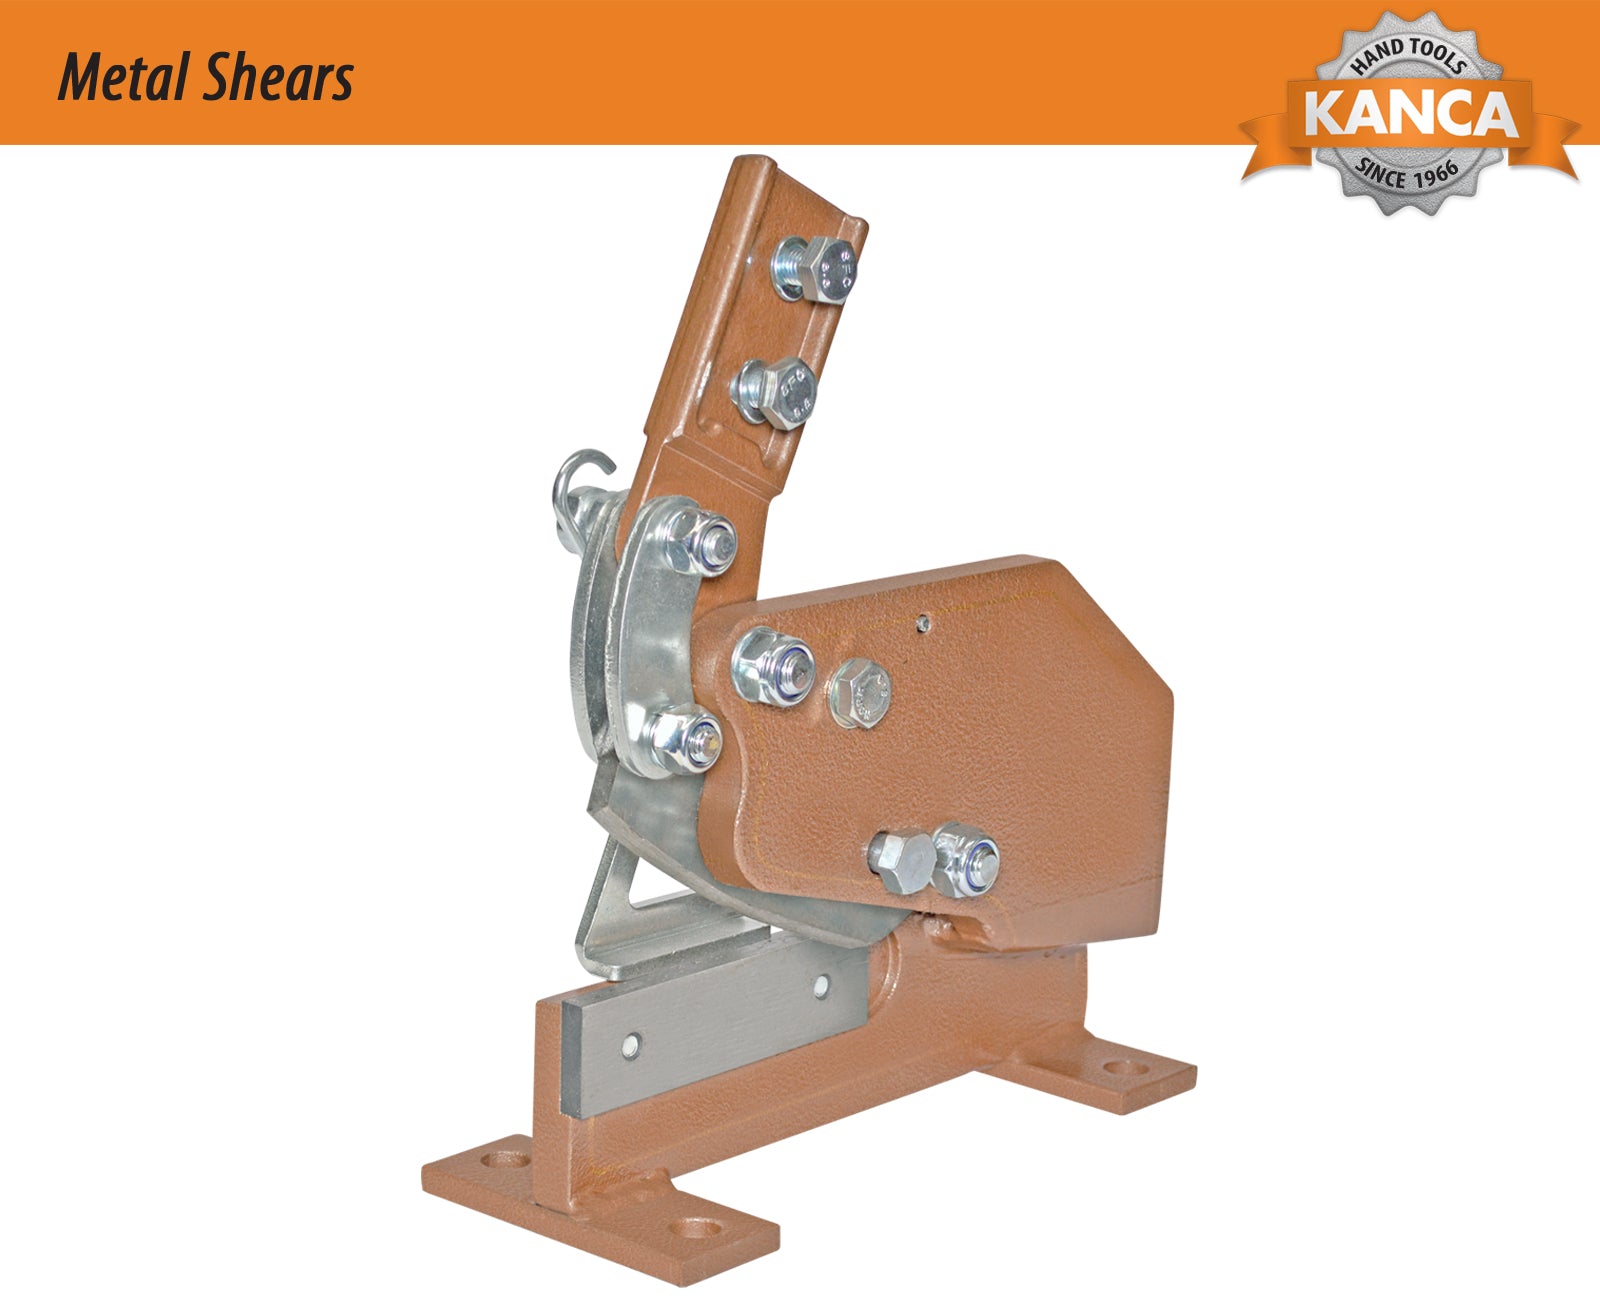 KANCA- METAL SHEARS - MS2BR4 , Metal Cutter , Industrial Scissors for –  KancaHandTools